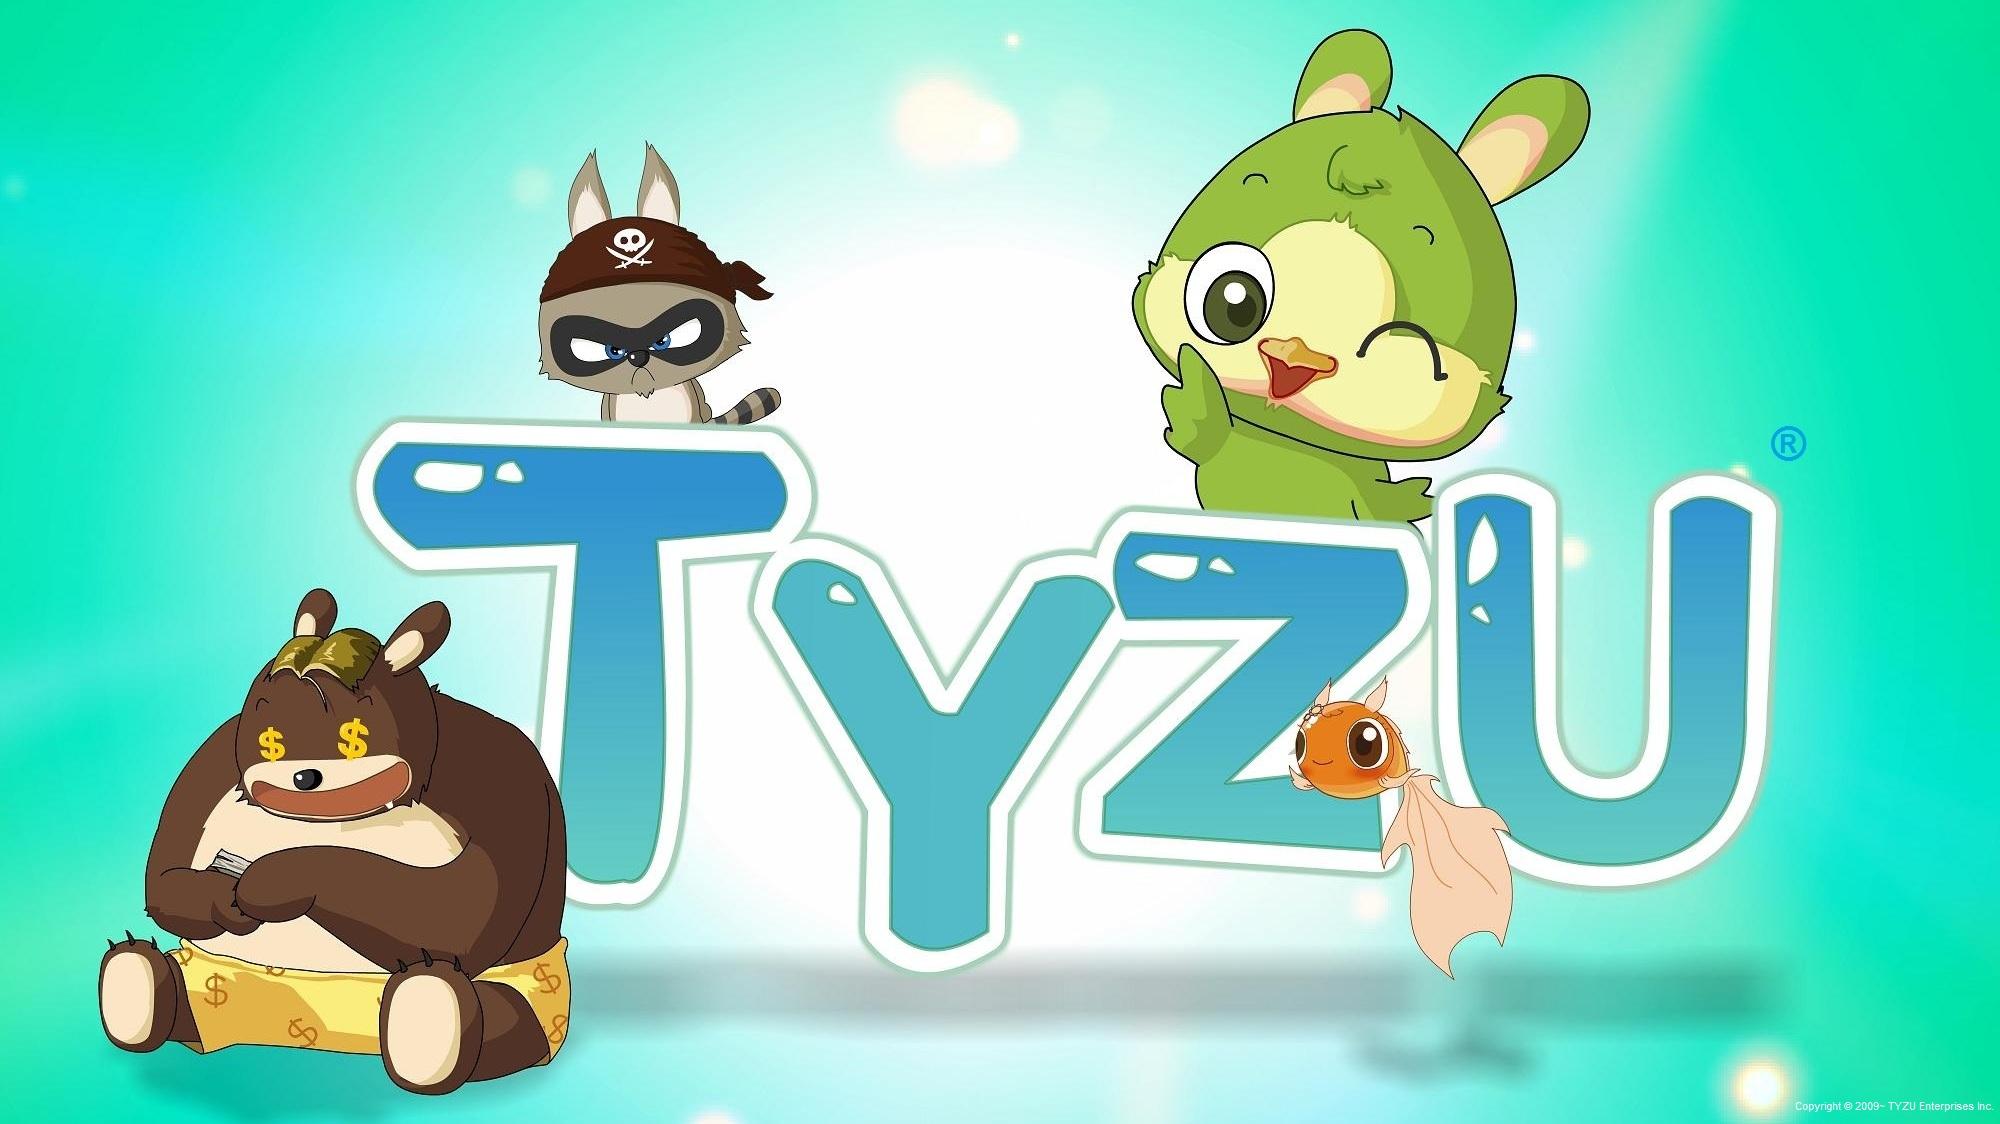 TYZU™ Cute Cartoon Characters and Landscape Wallpaper